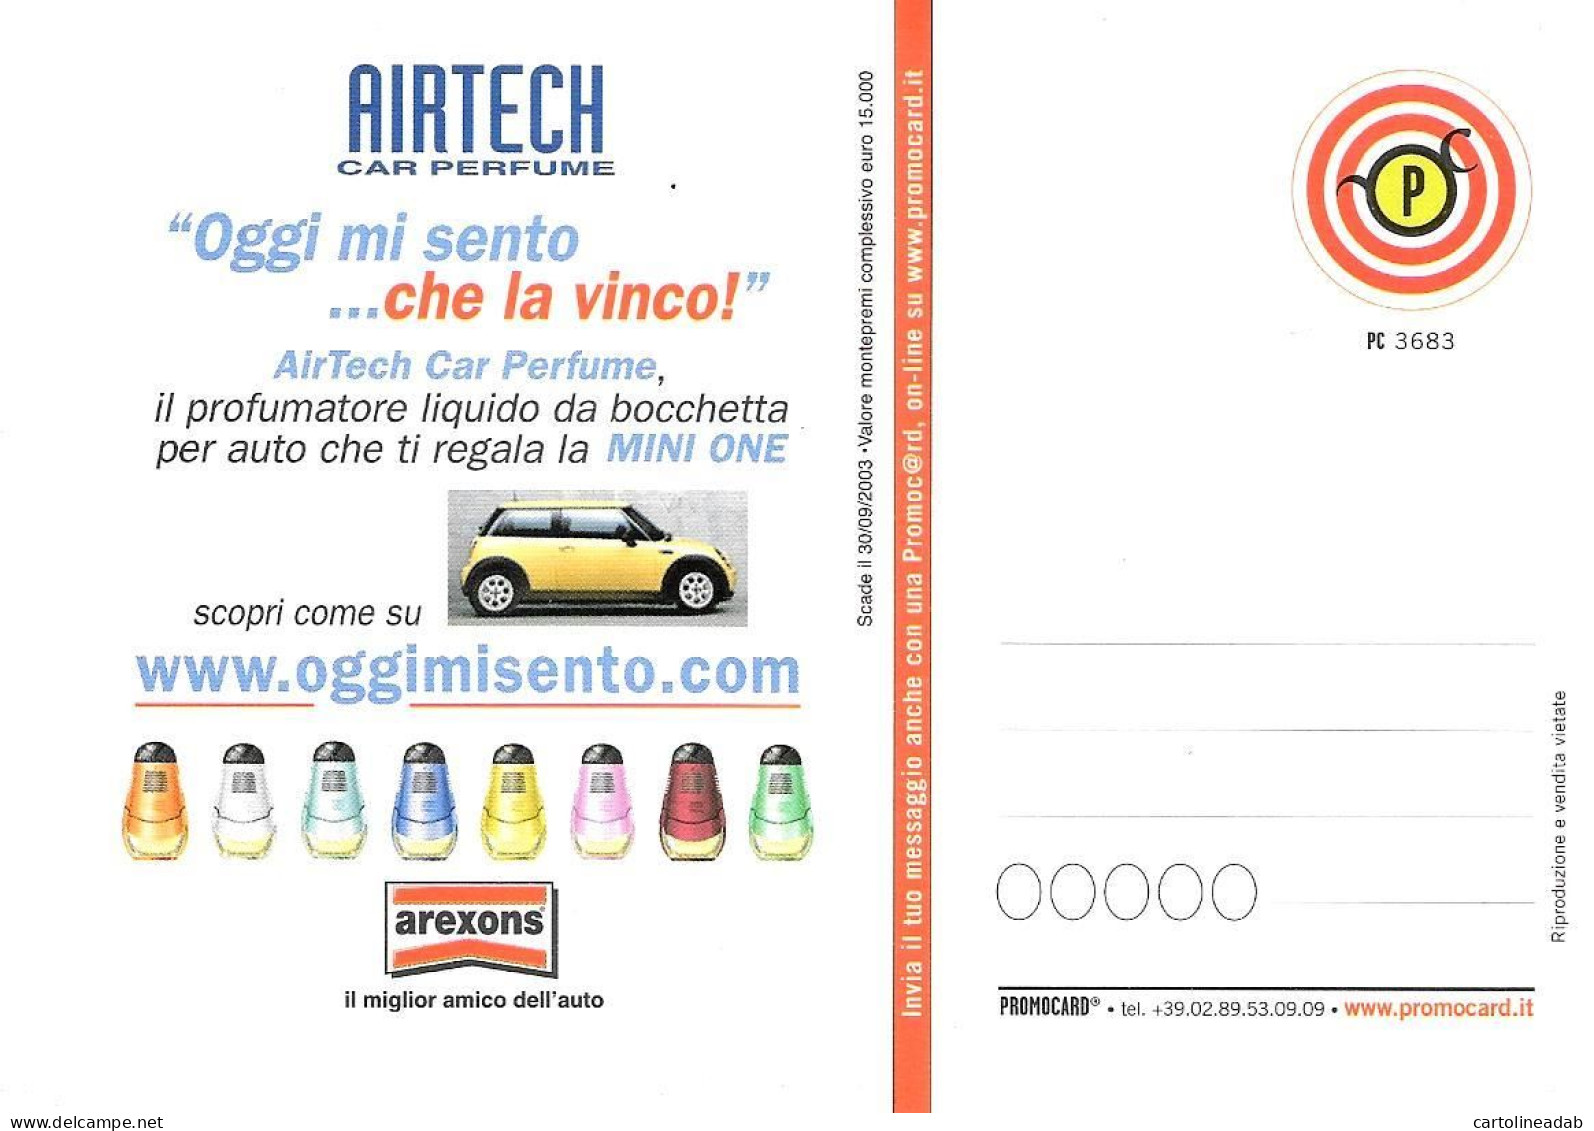 [MD9540] CPM - AREXONS - AIRTECH CAR PARFUME - PROMOCARD 3683 - PERFETTA - Non Viaggiata - Advertising